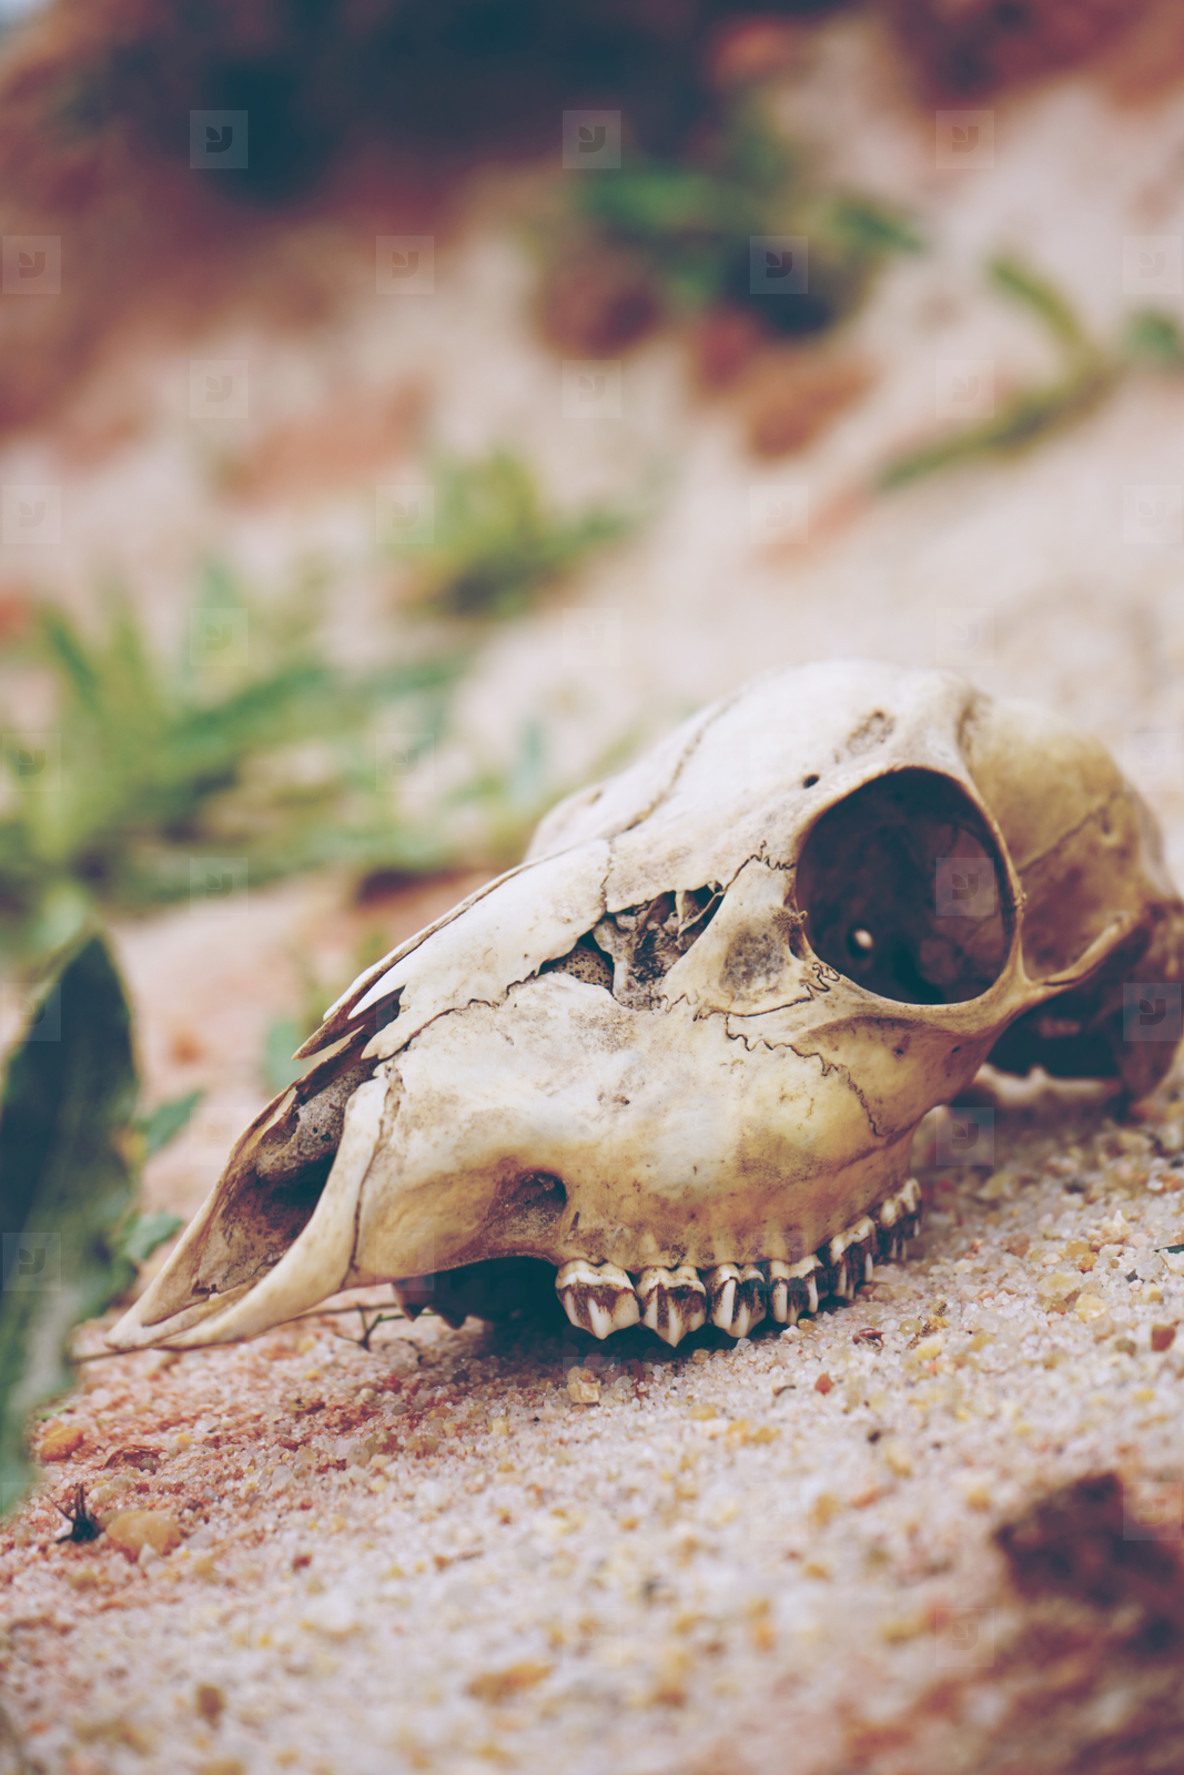 Animal skull in desert stock photo (151876) - YouWorkForThem